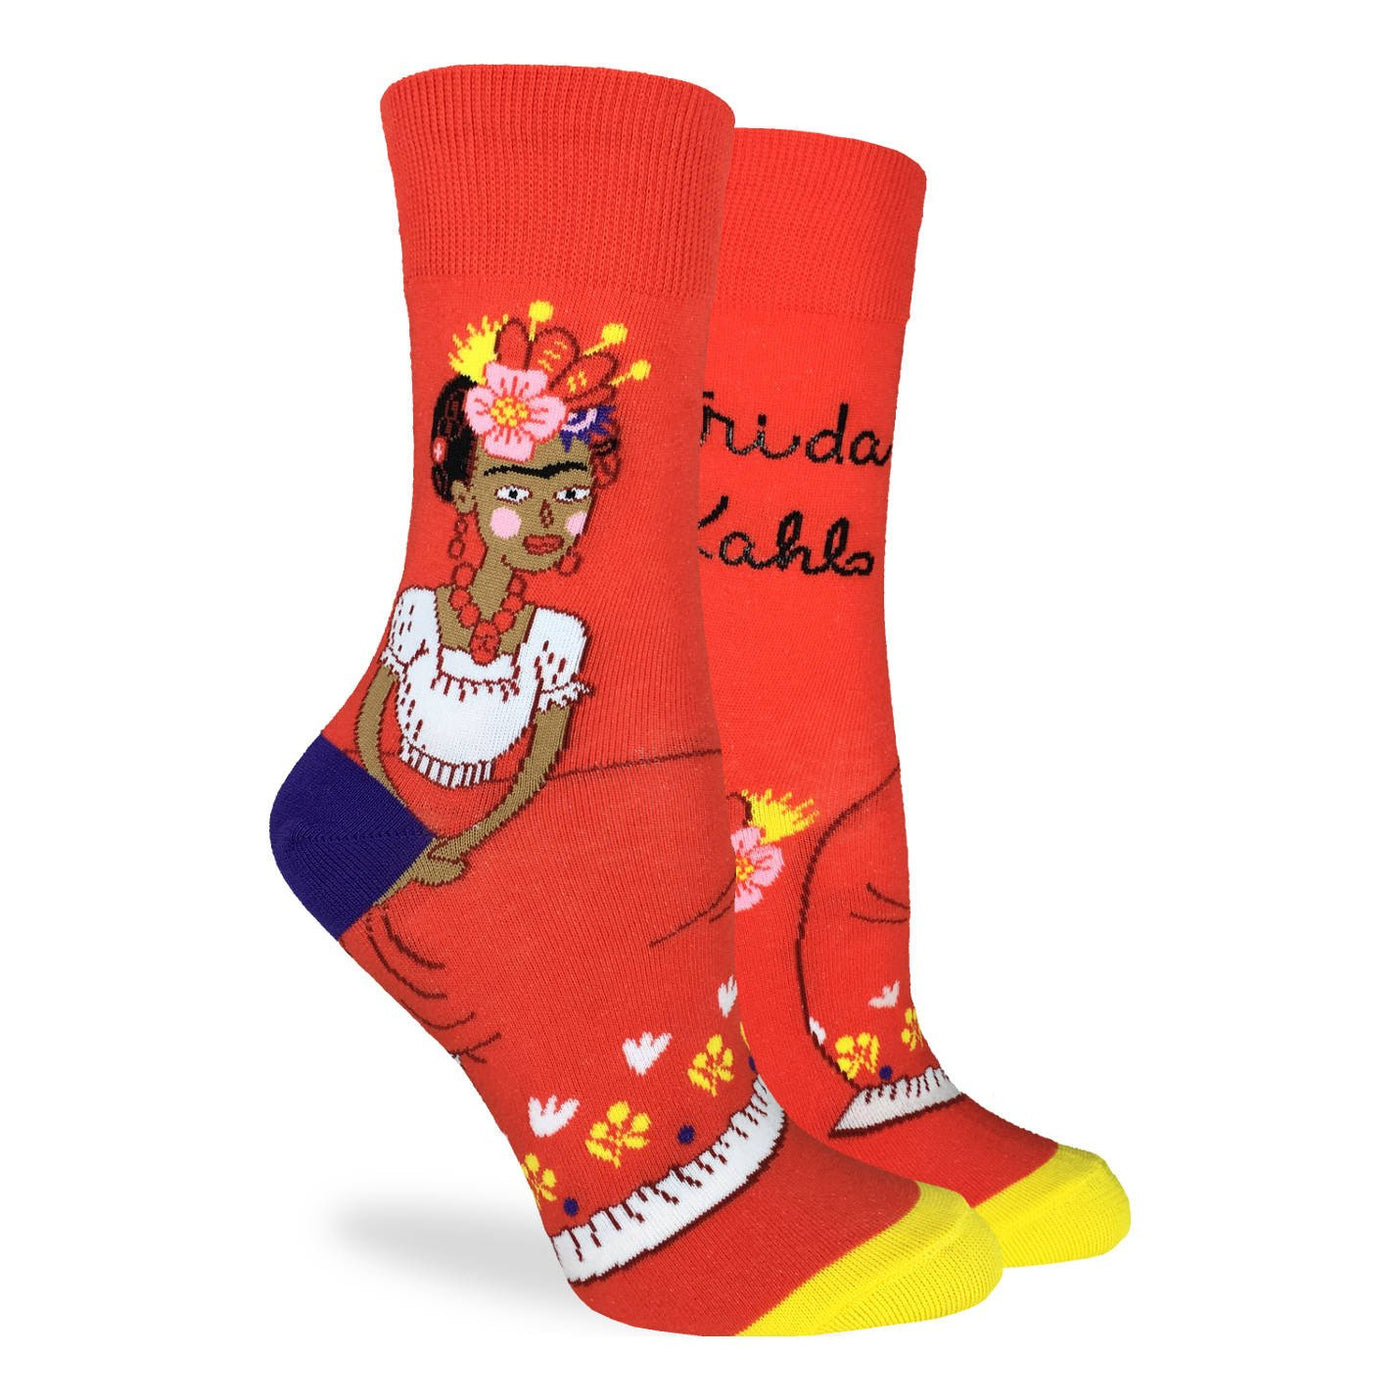 "Frida Kahlo" Cotton Crew Socks by Good Luck Sock - Medium